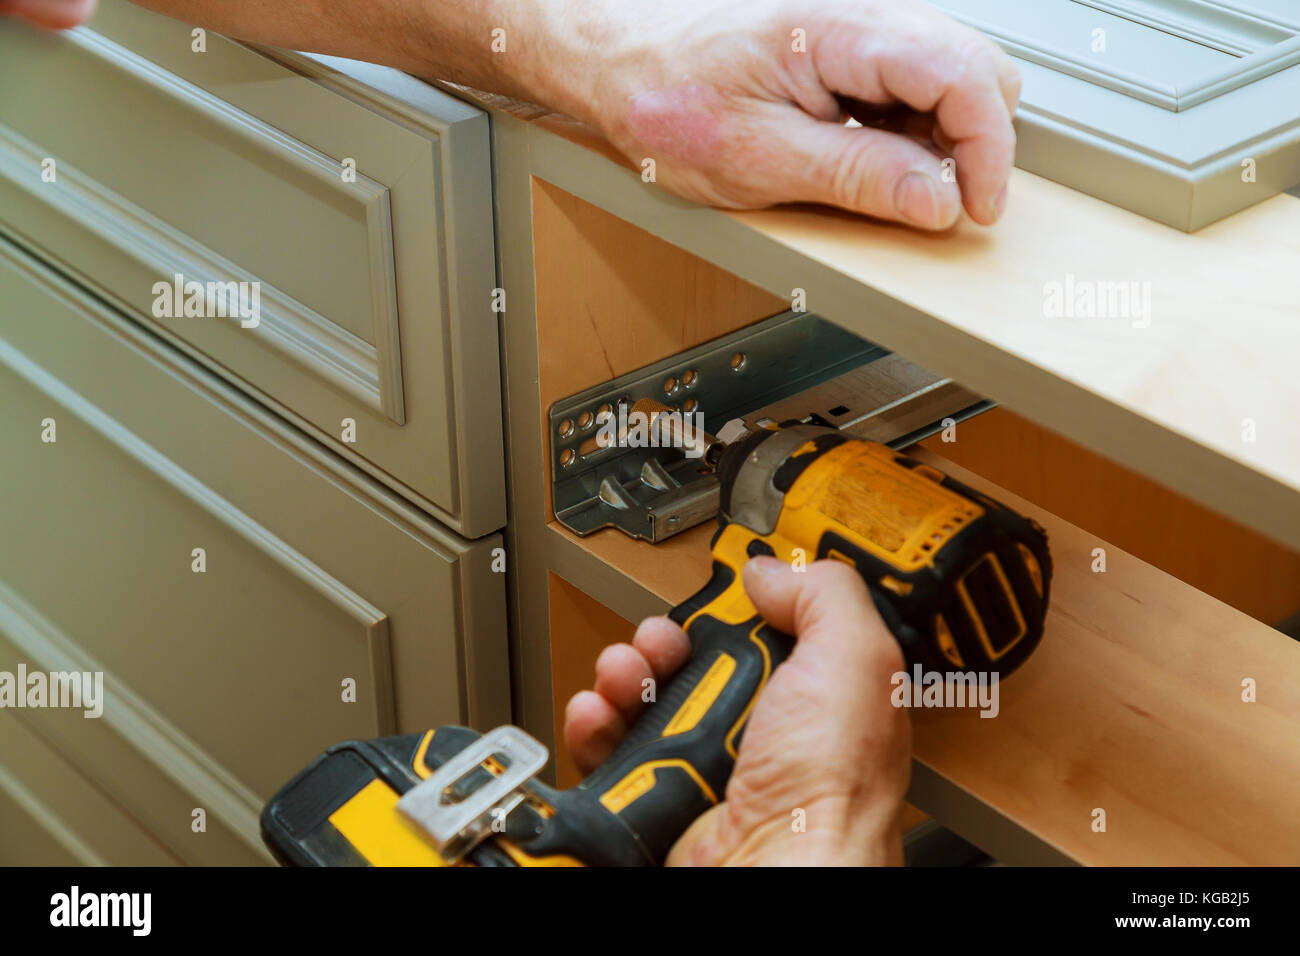 Adjusting Fixing Cabinet Door Hinge Adjustment On Kitchen Cabinets